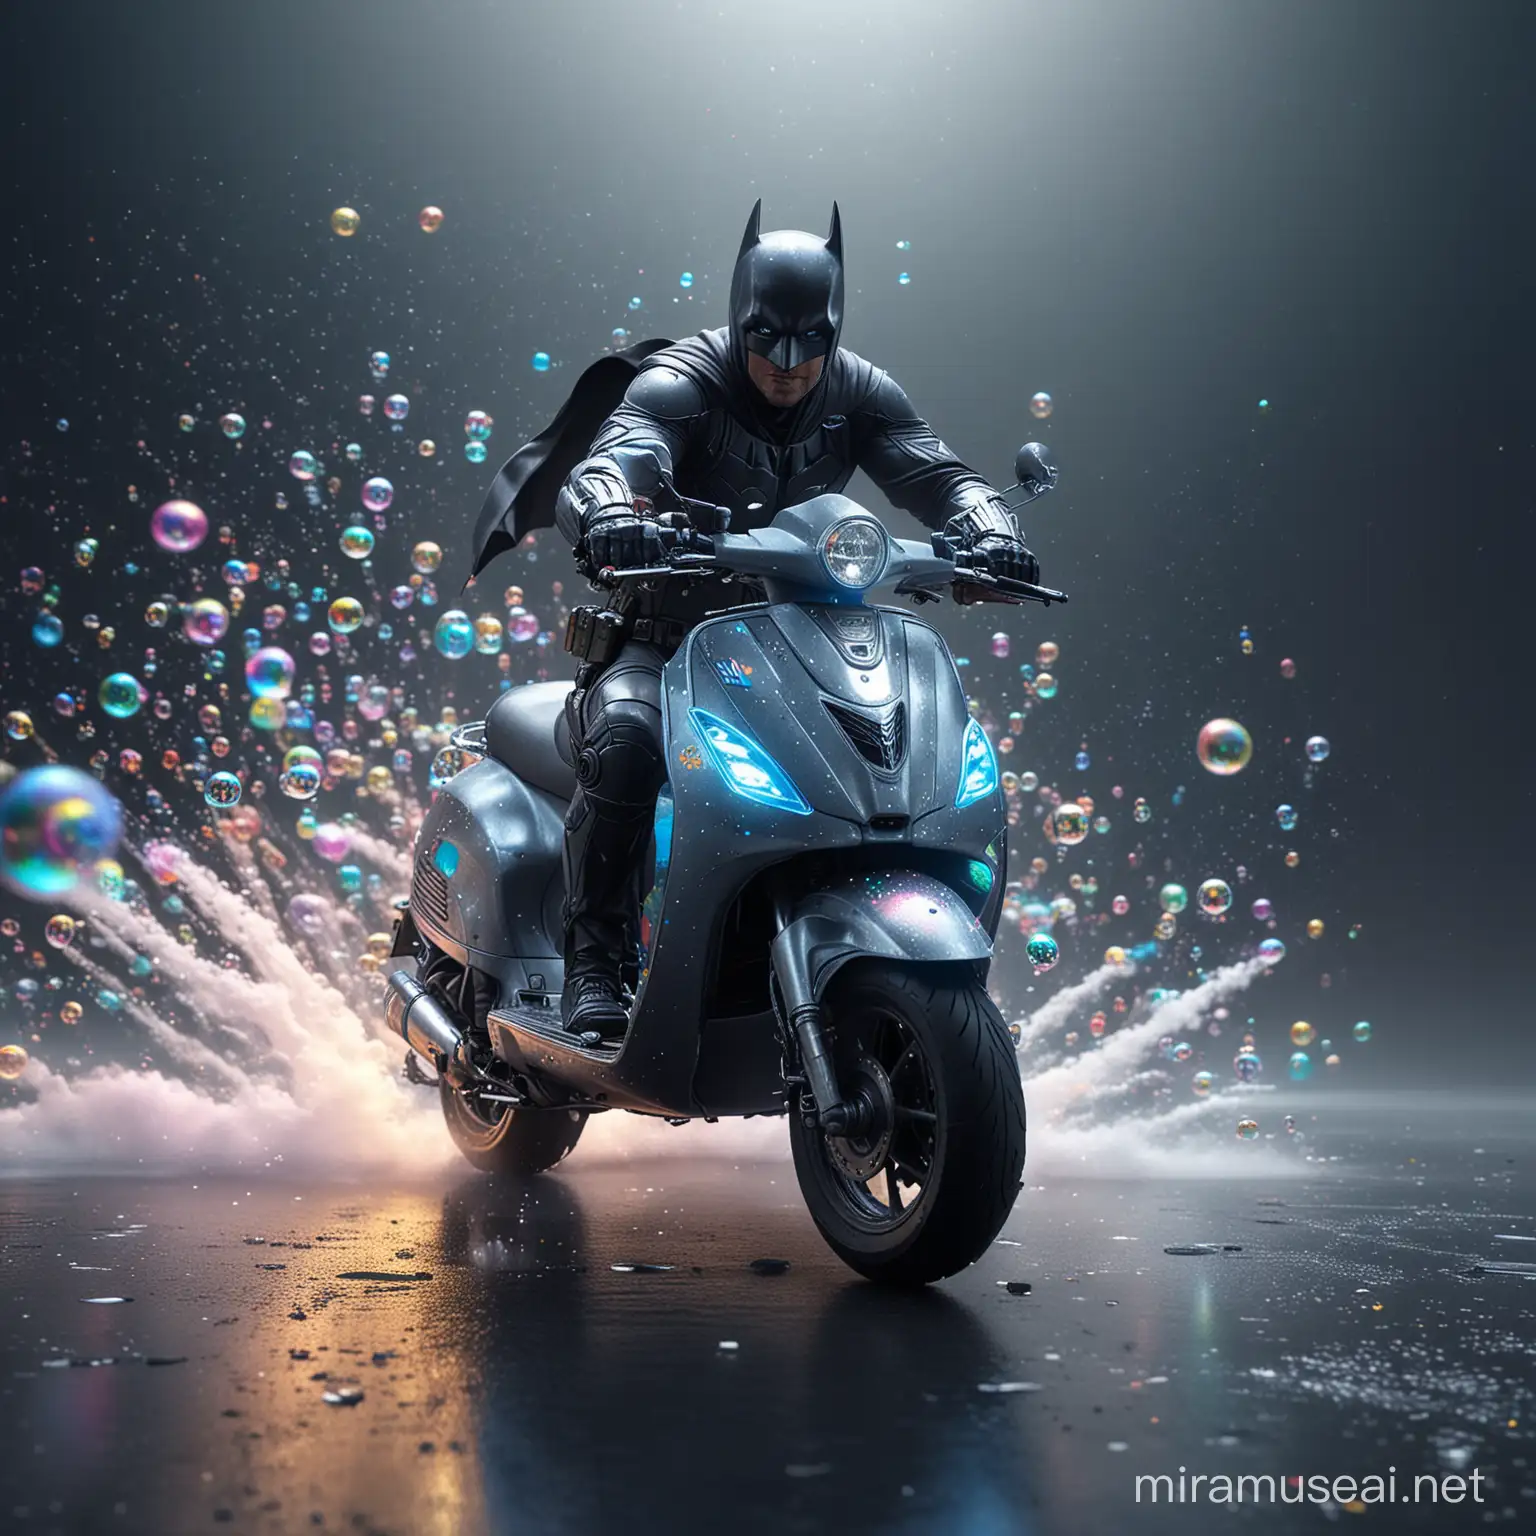 Superhero Batman Speeds on Glowing Vespa with Rainbow Soap Bubbles